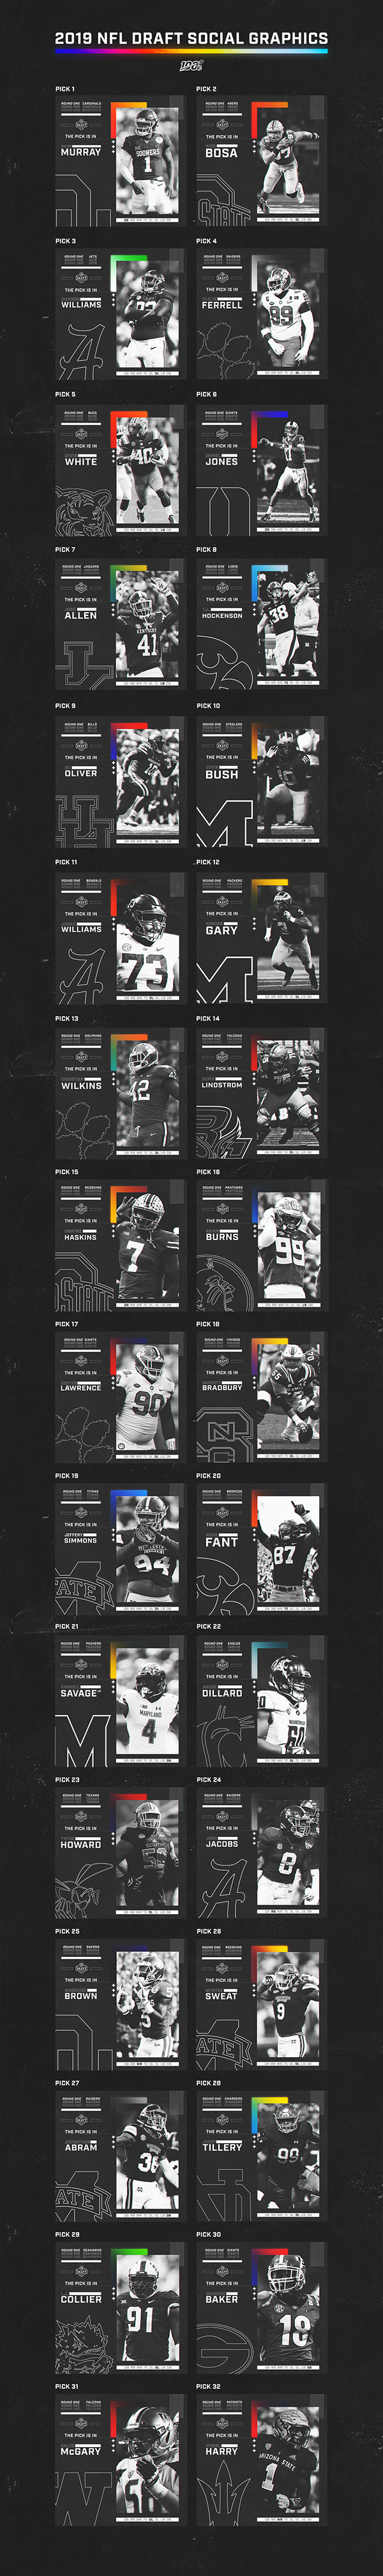 2019 NFL Draft Social Graphics